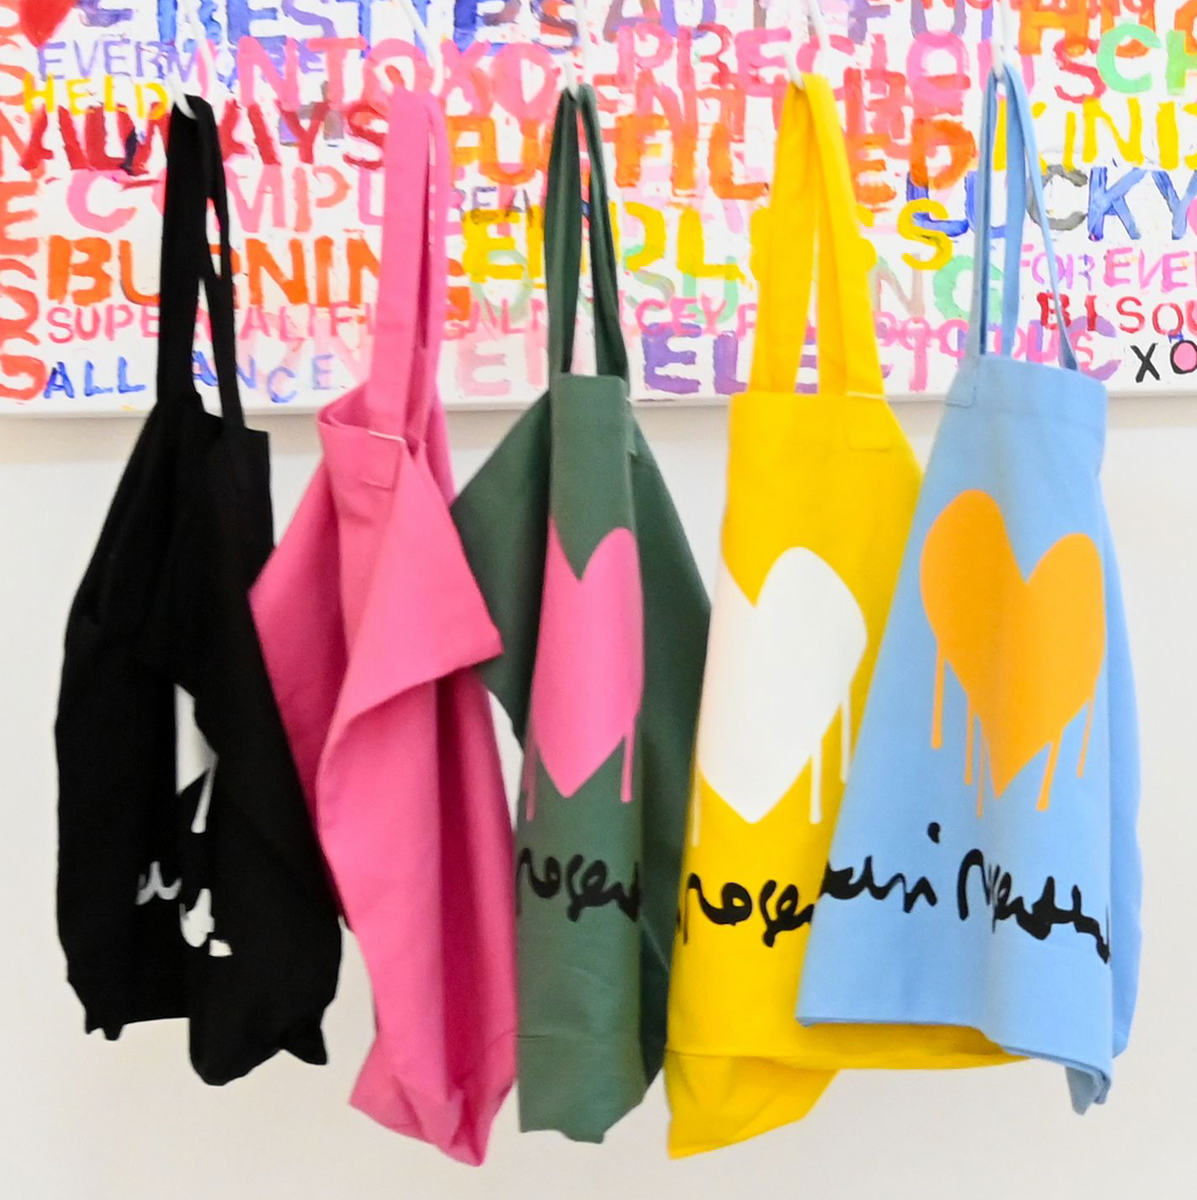 Reduce Reuse Recycle Bag Reusable Bag Canvas Tote Bag -  Hong Kong